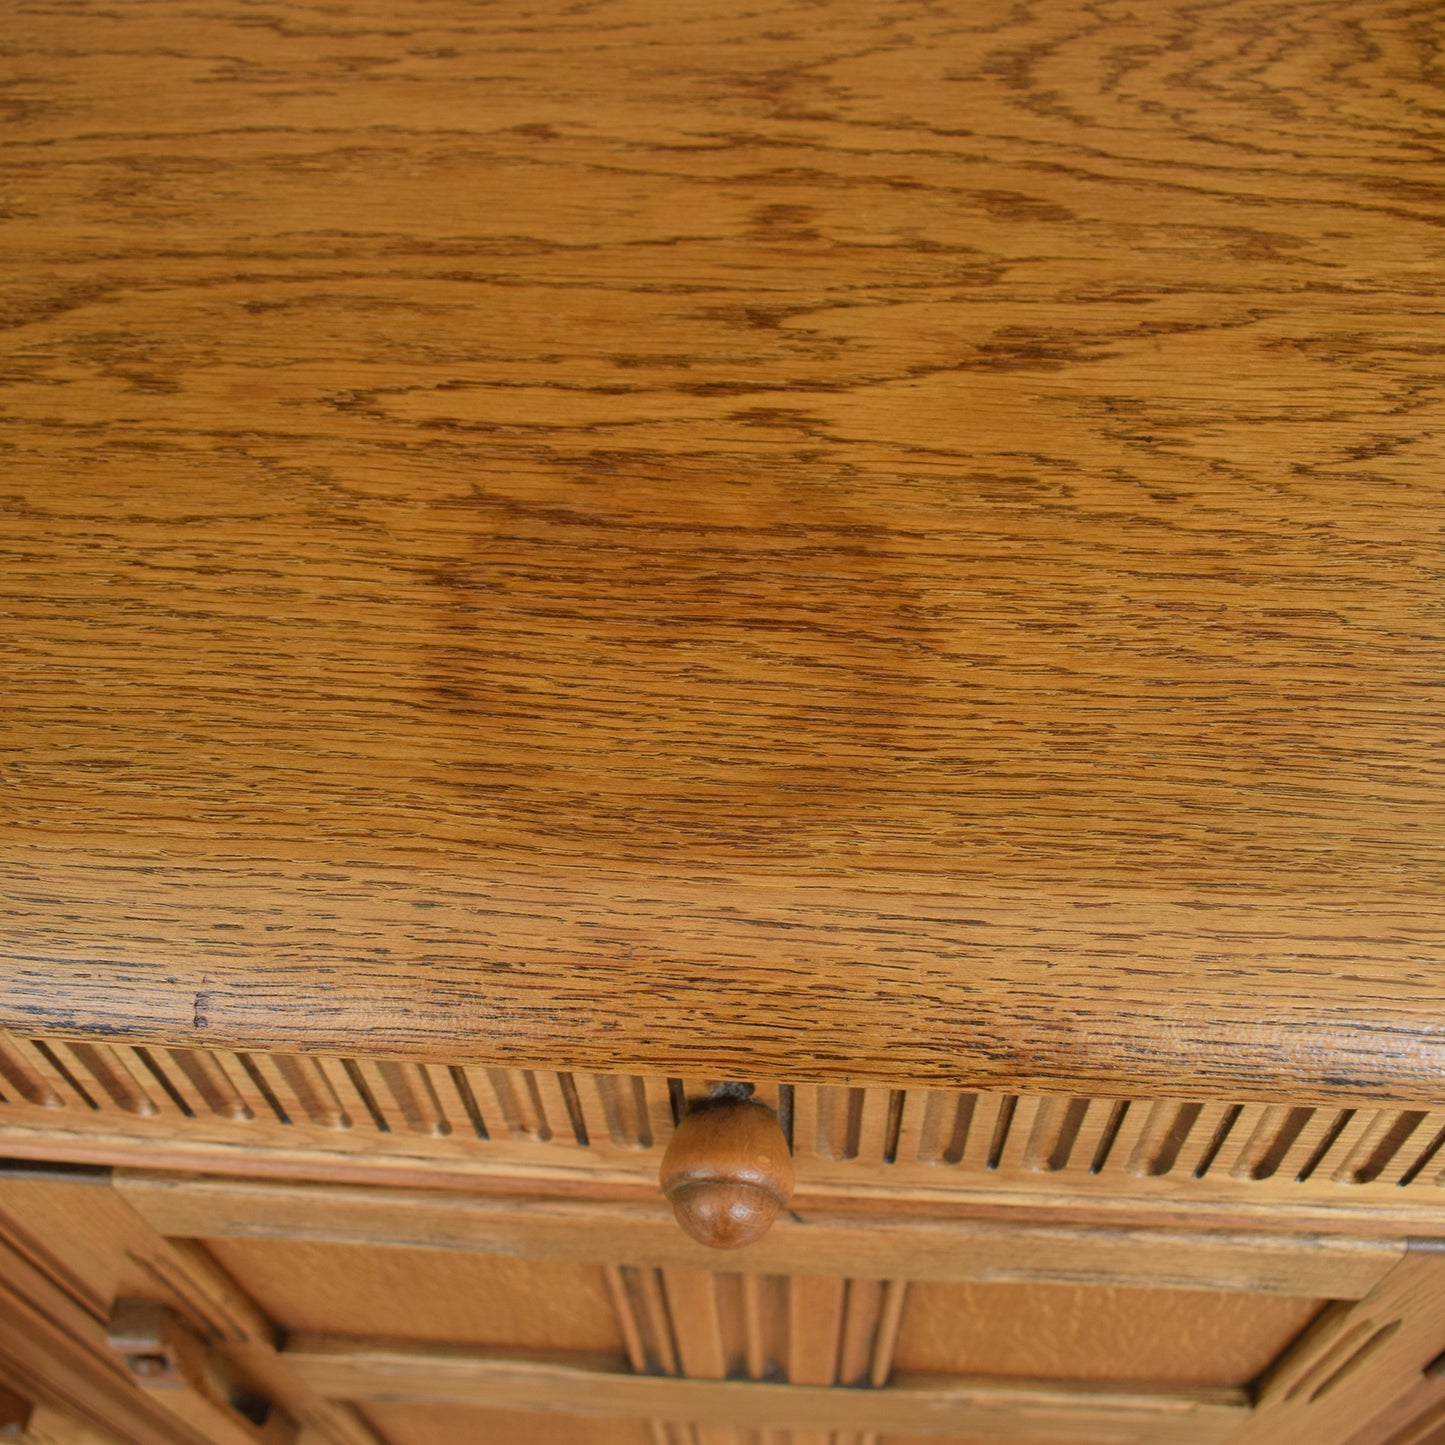 Restored Oak Dresser